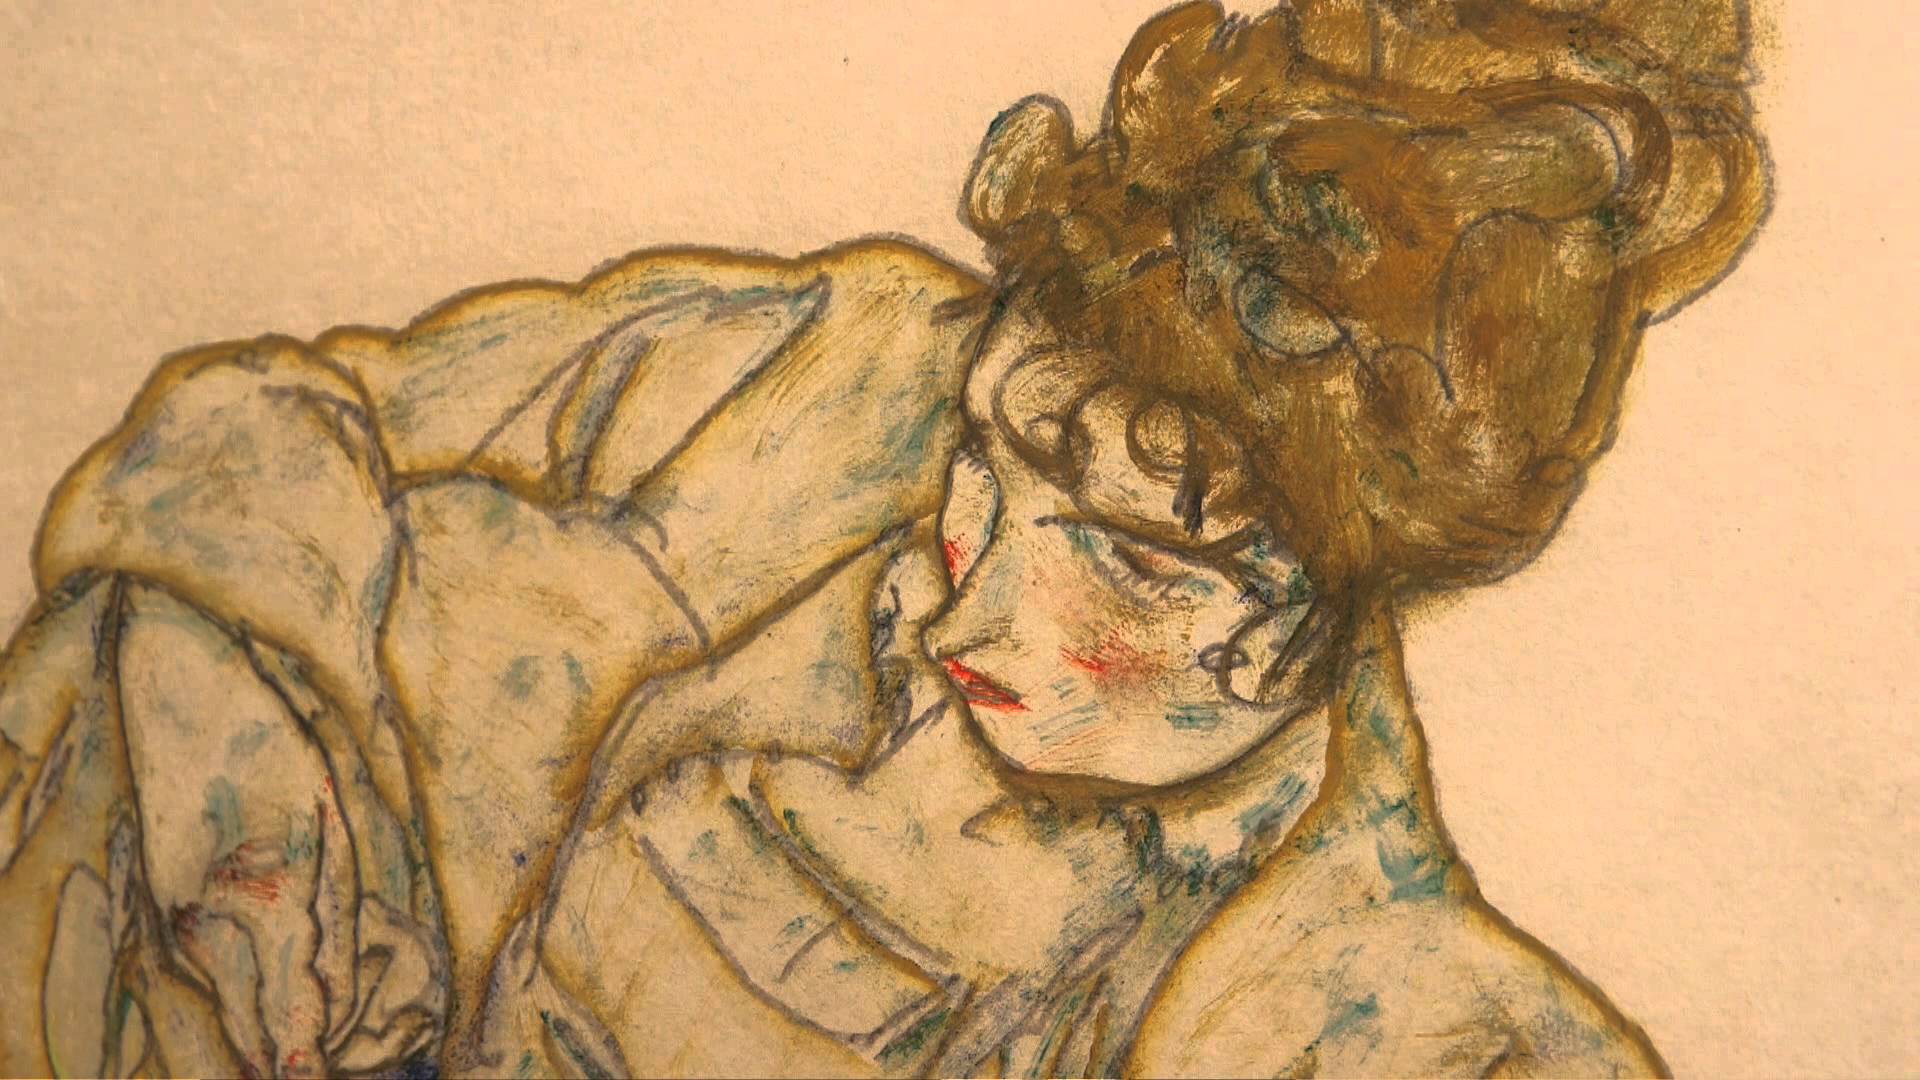 Swarovski sponsors Egon Schiele: The Radical Nude